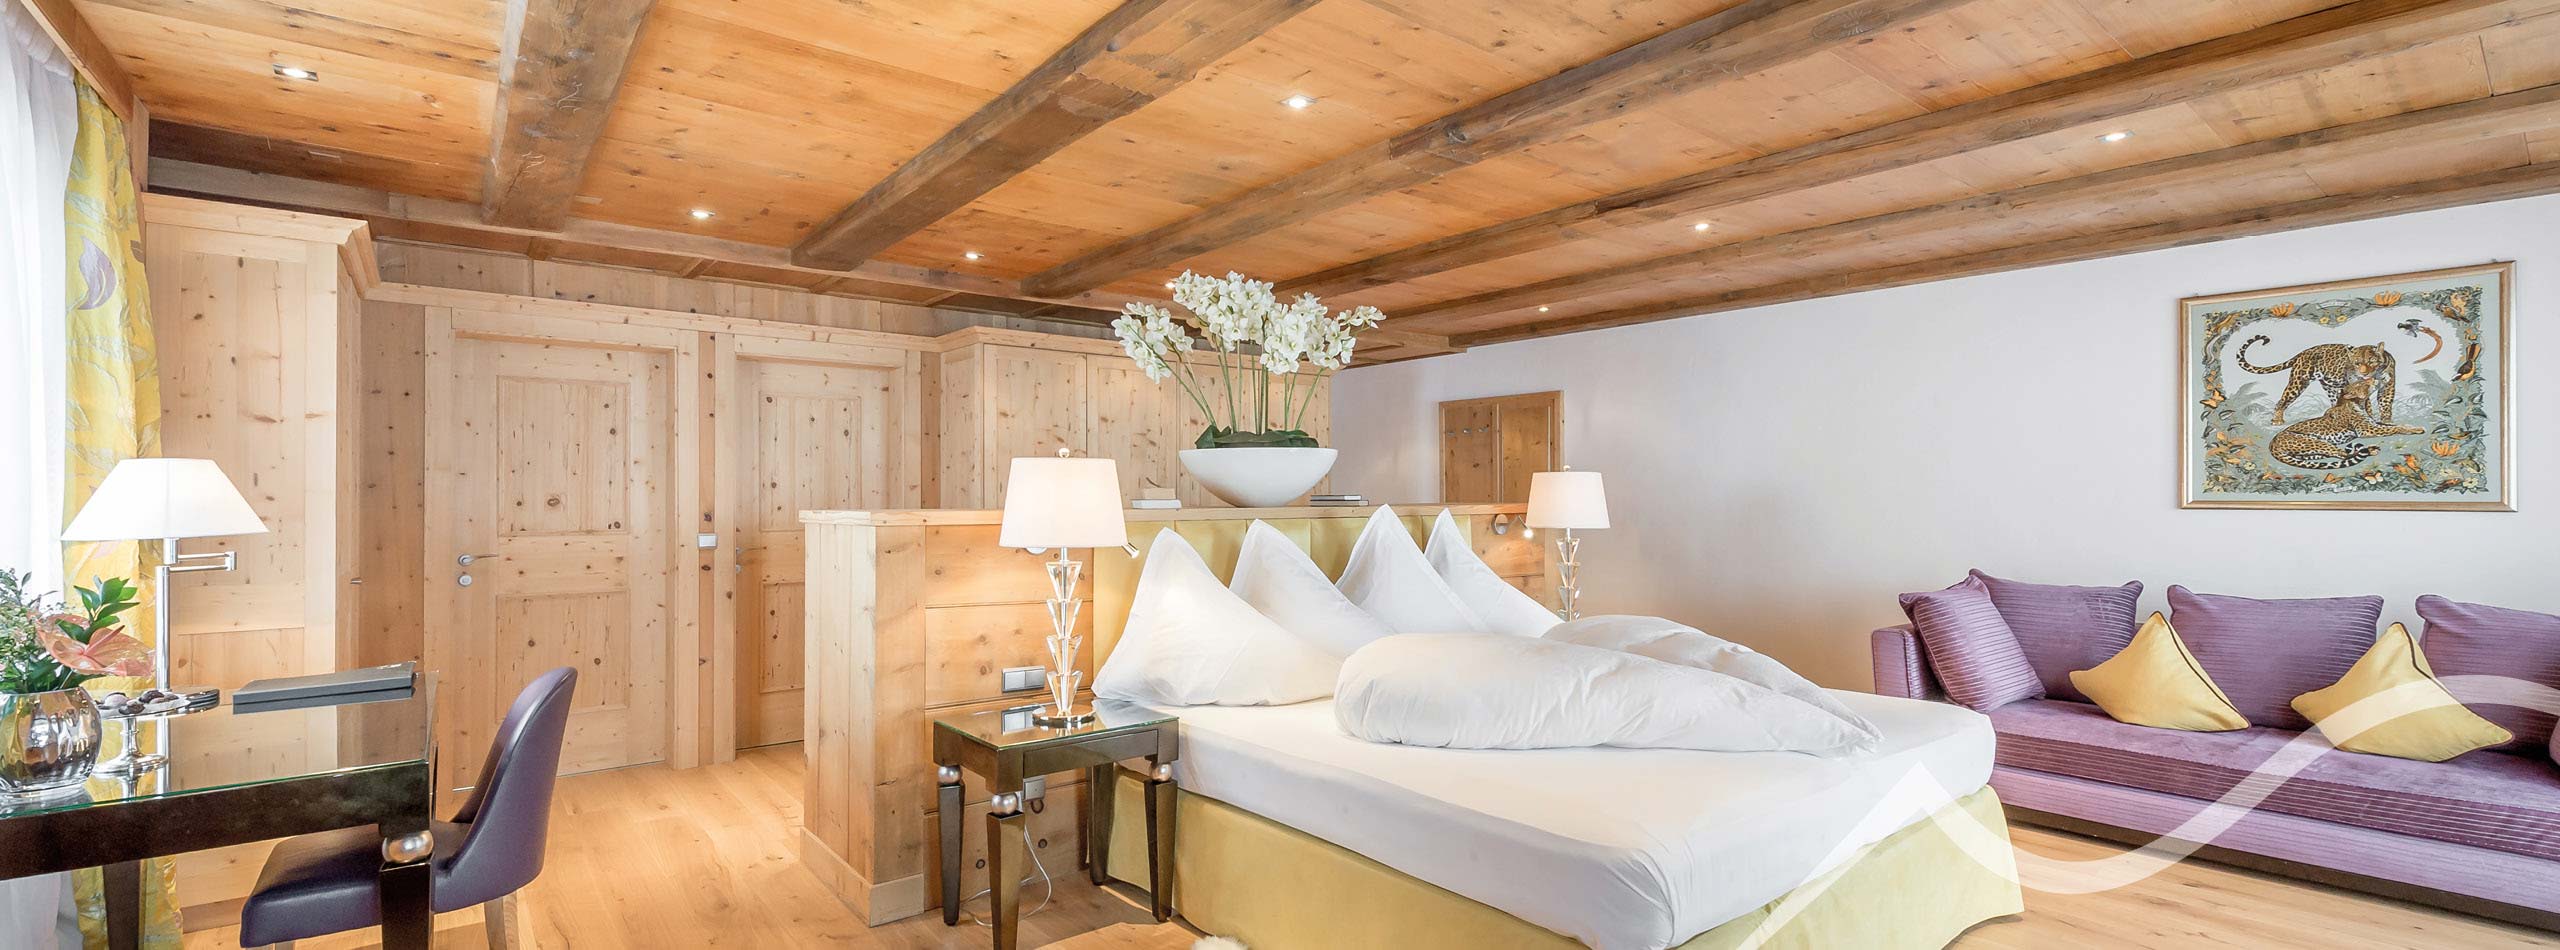 Rooms & Suites luxury hotel 5-star-superior TOP Hotel Hochgurgl Tyrol Austria